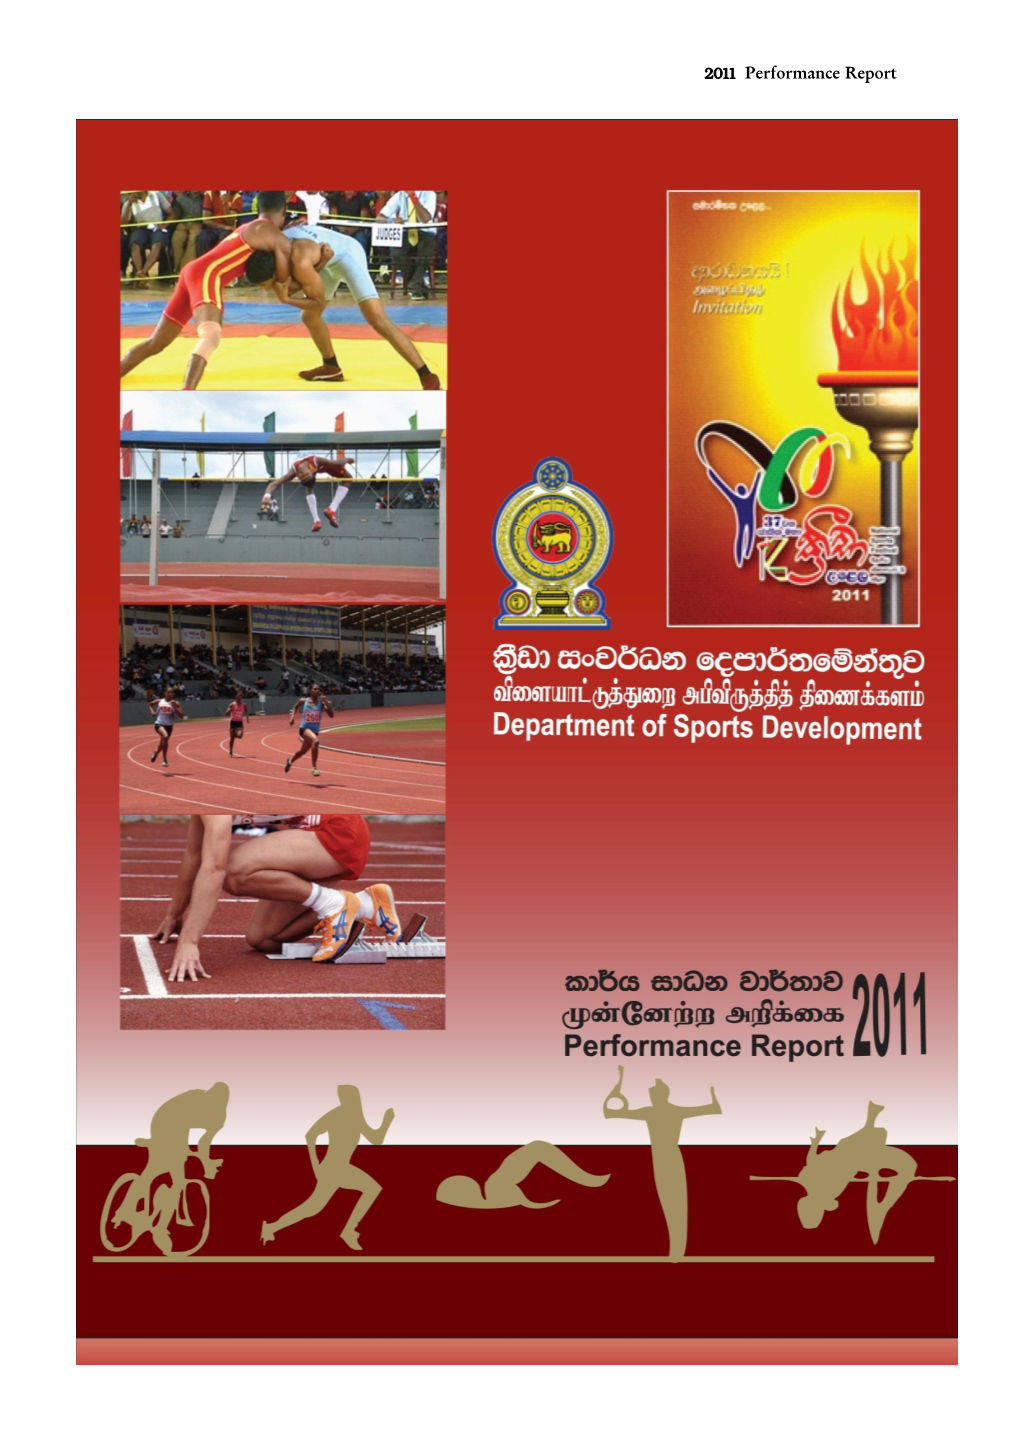 Department of Sports Development 2011 Performance Report